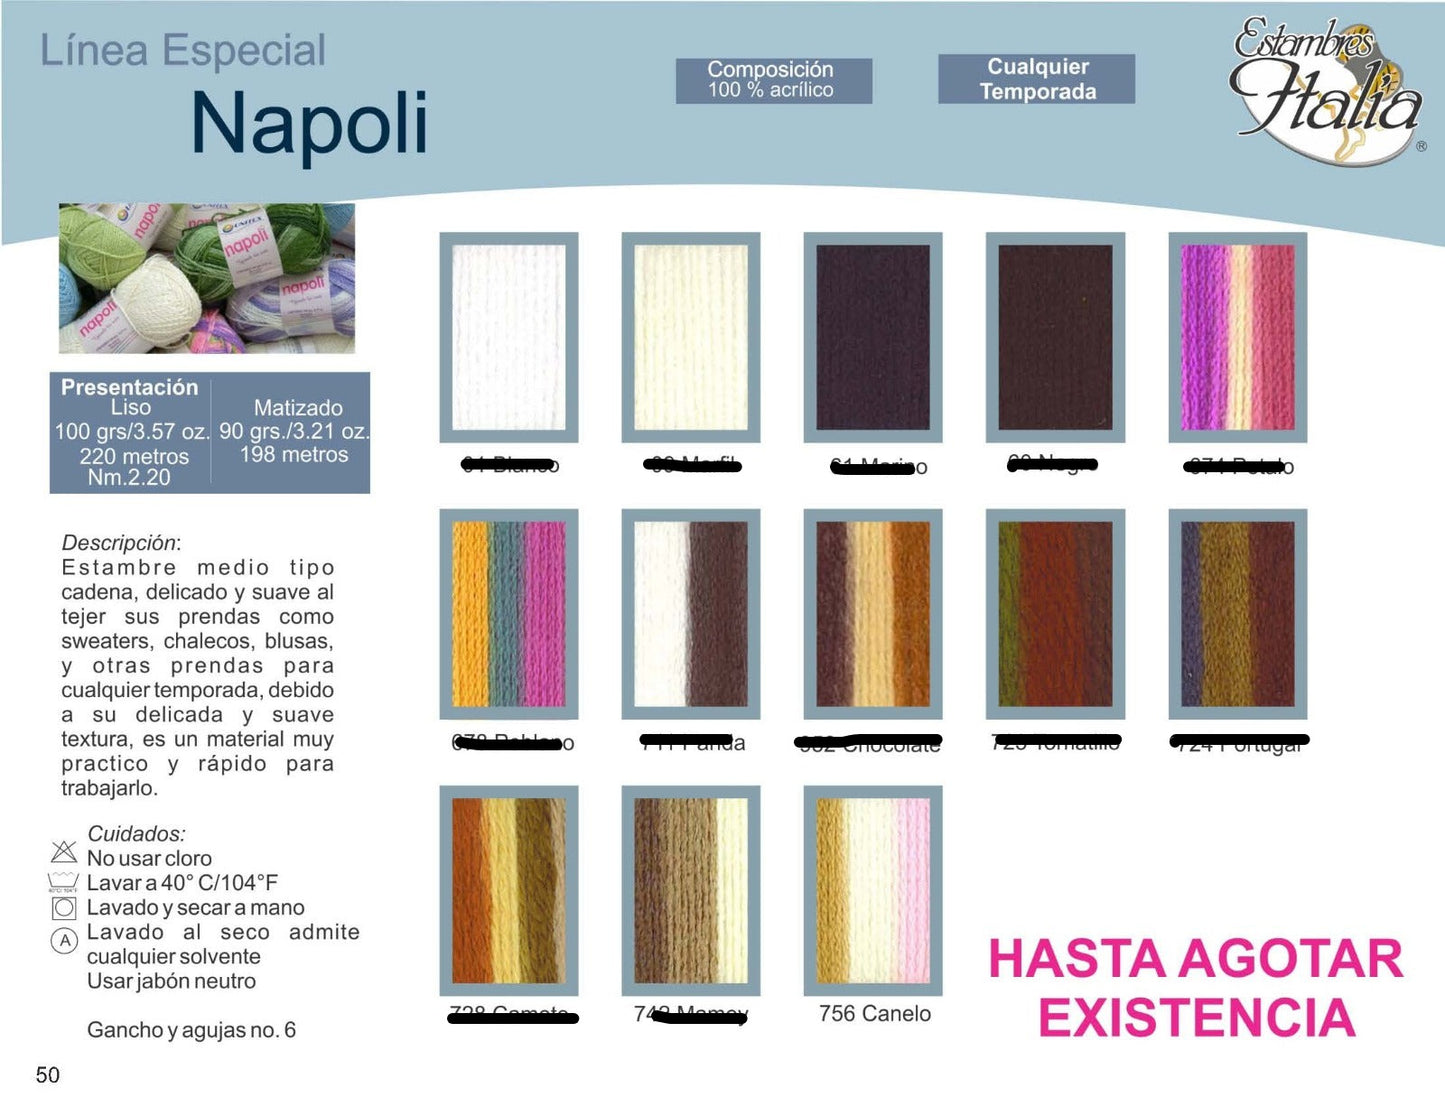 Napoli Metálico Liso / Met. Mat. de 100 grs / Matizado de 90 grs